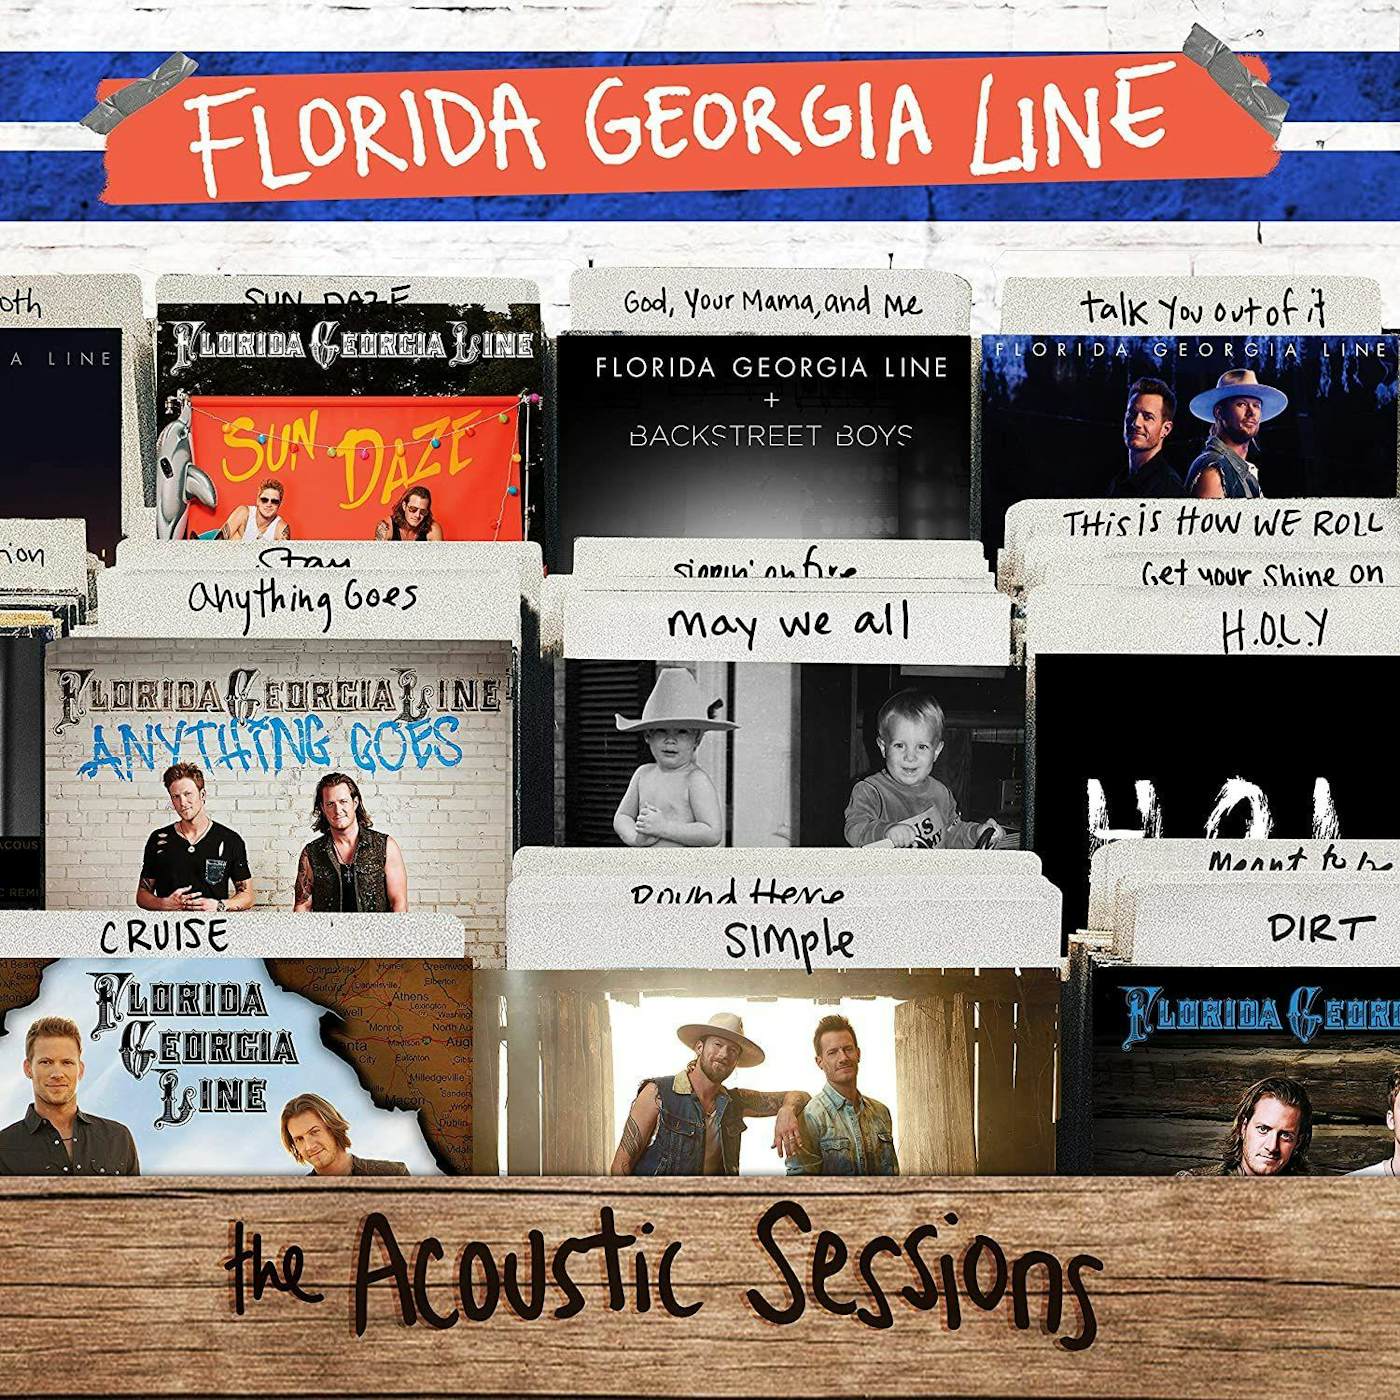 Florida Georgia Line ACOUSTIC SESSIONS Vinyl Record